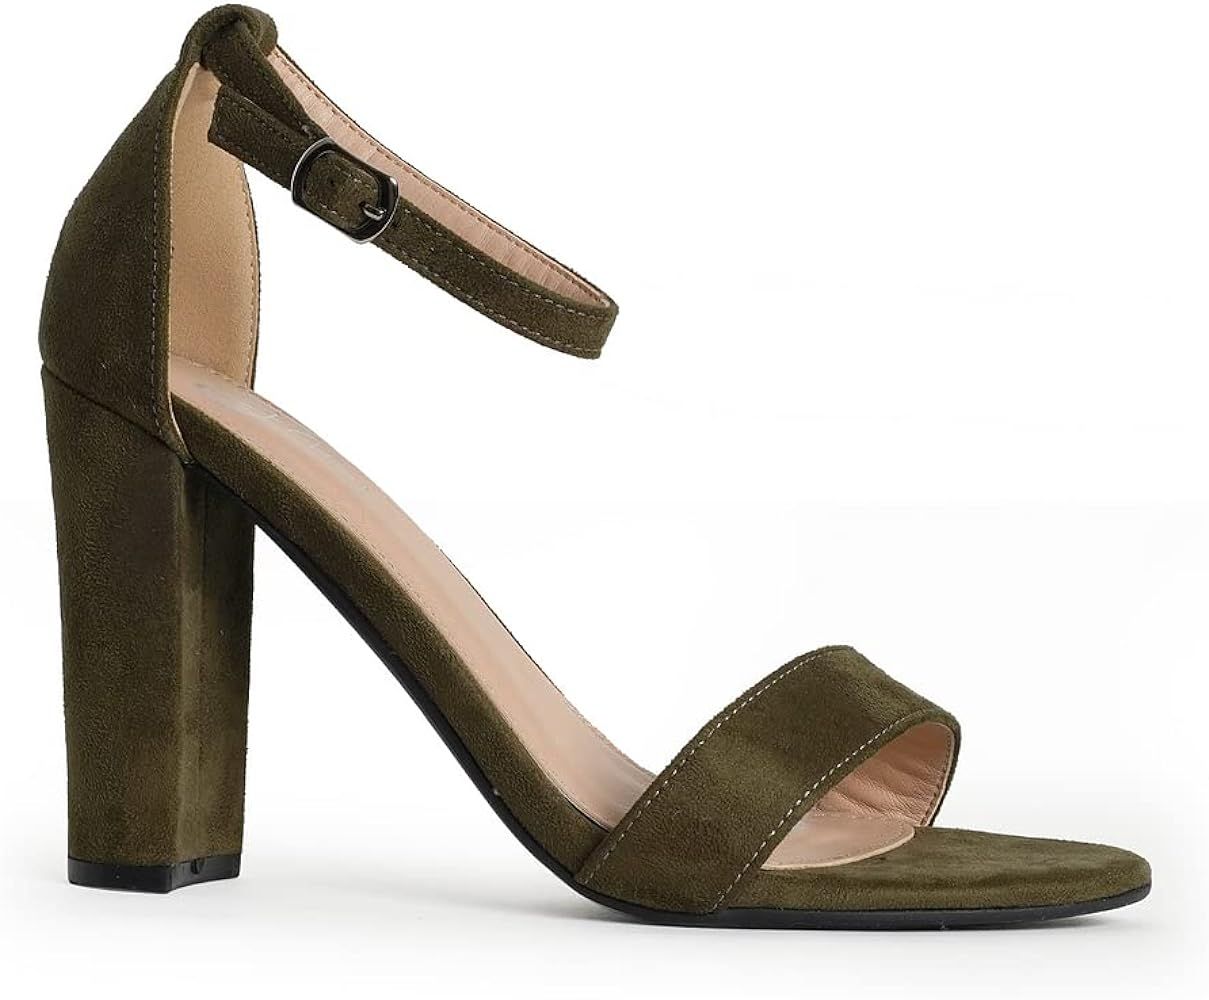 J. Adams Shirley Heels for Women - Ankle Strap High Heel Dressy Sandals | Amazon (US)